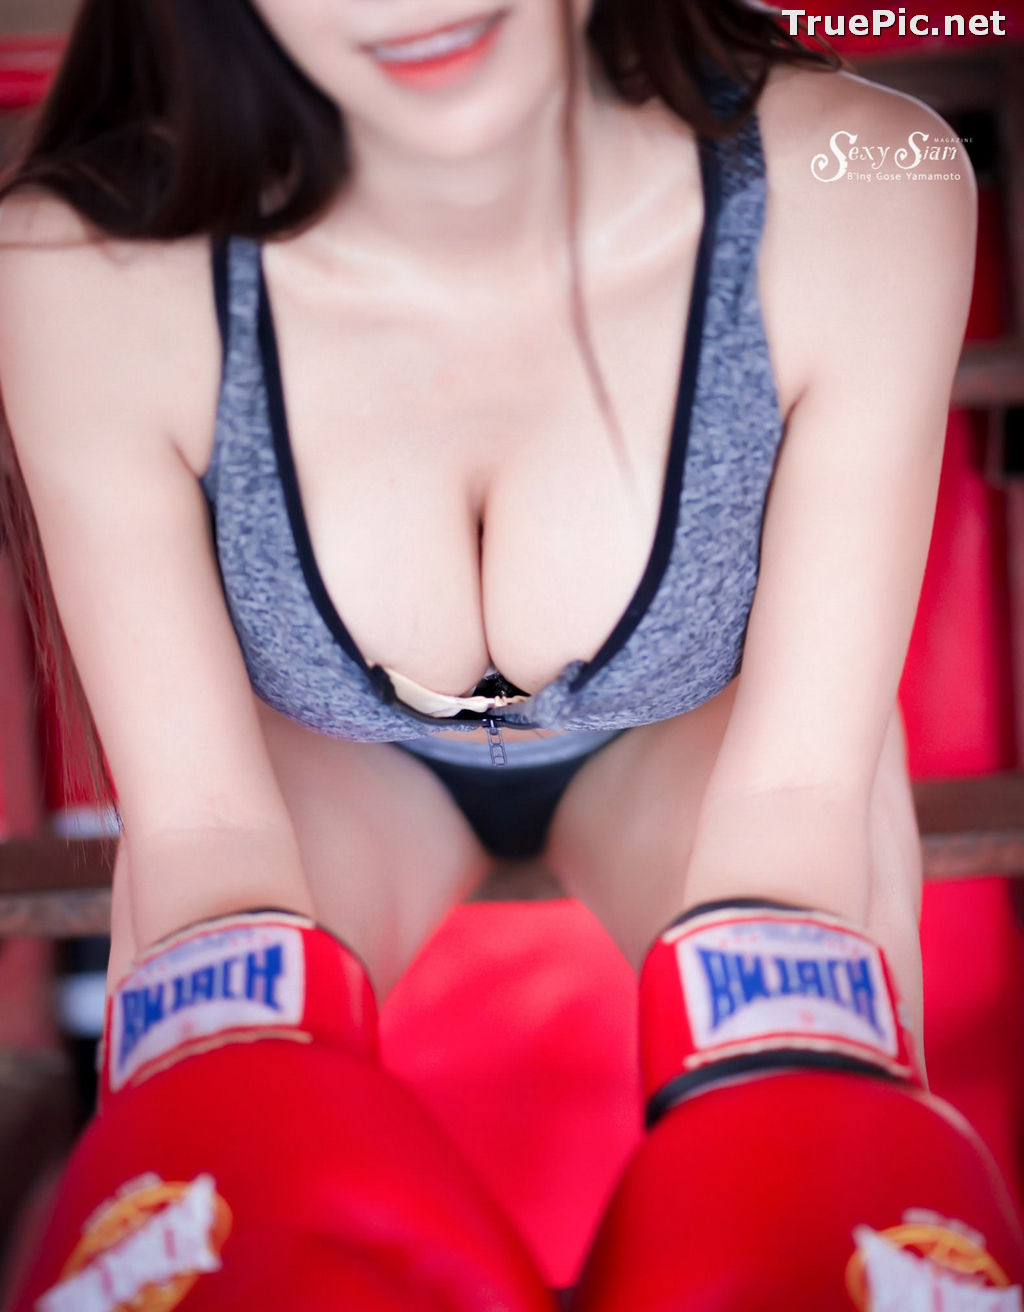 Image Thailand Model - Yotaka Suriya - Sexy Boxing Girl - TruePic.net - Picture-11